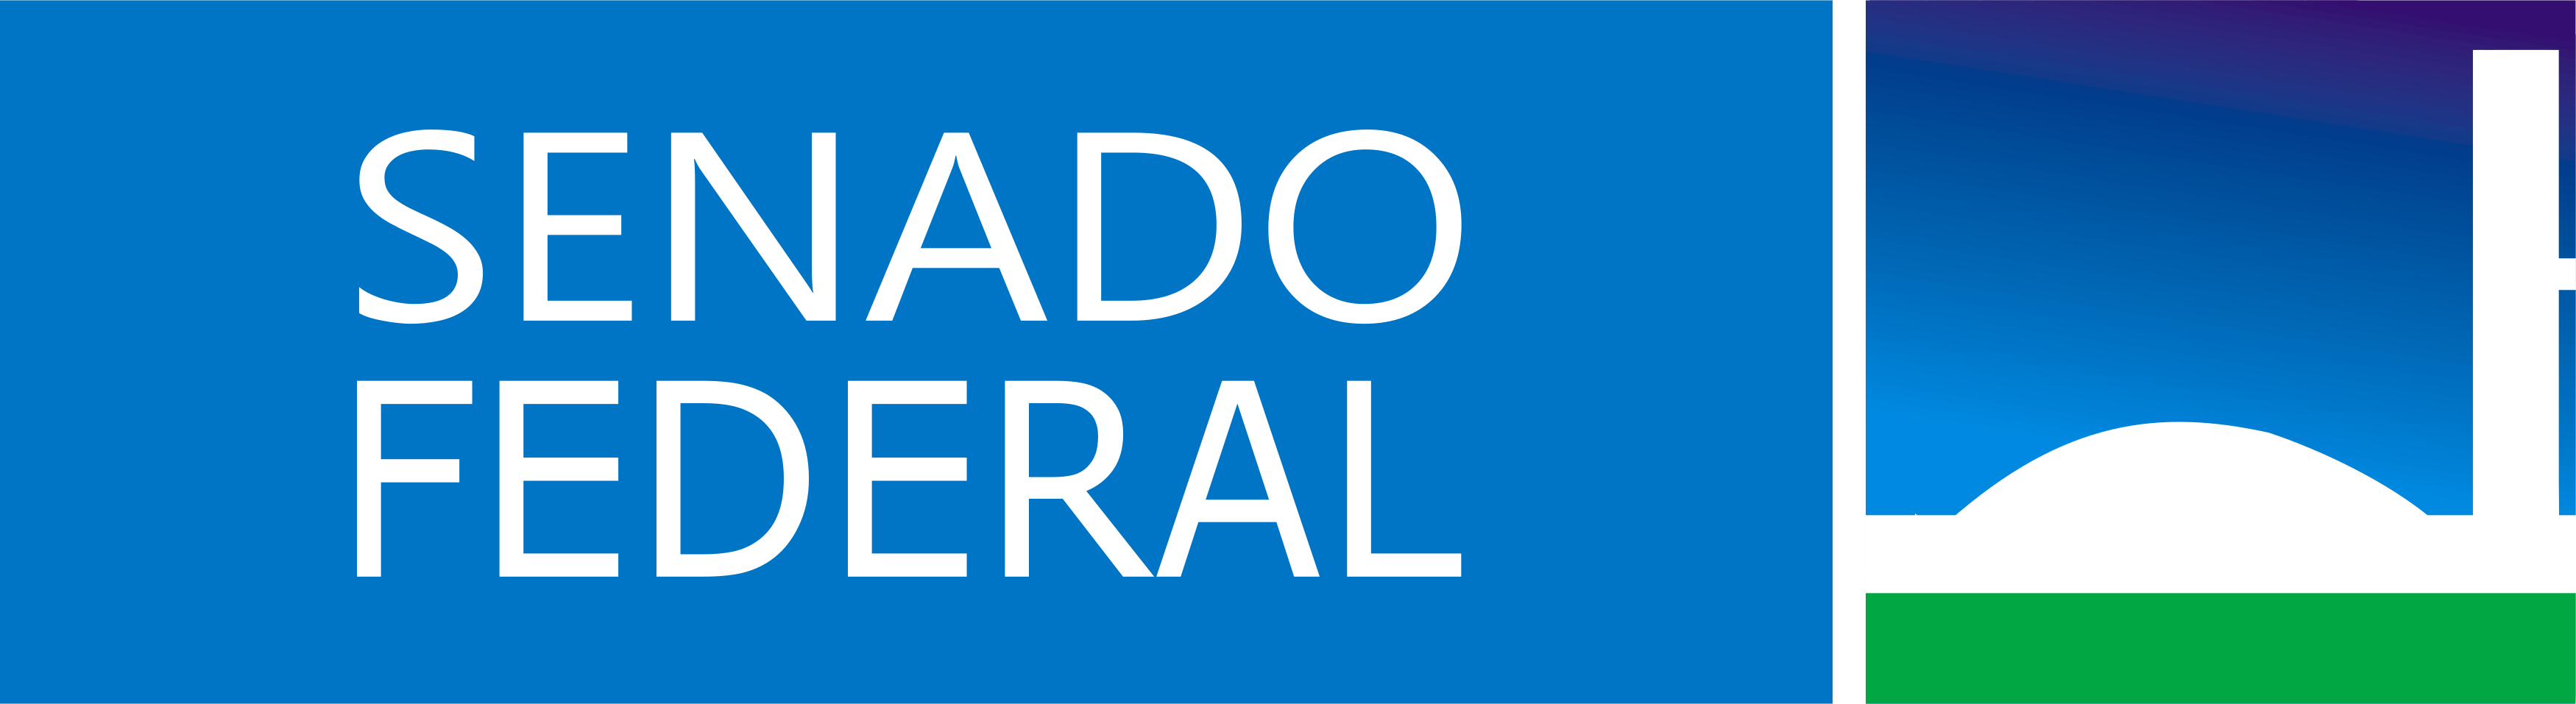 Senado Federal Logo.